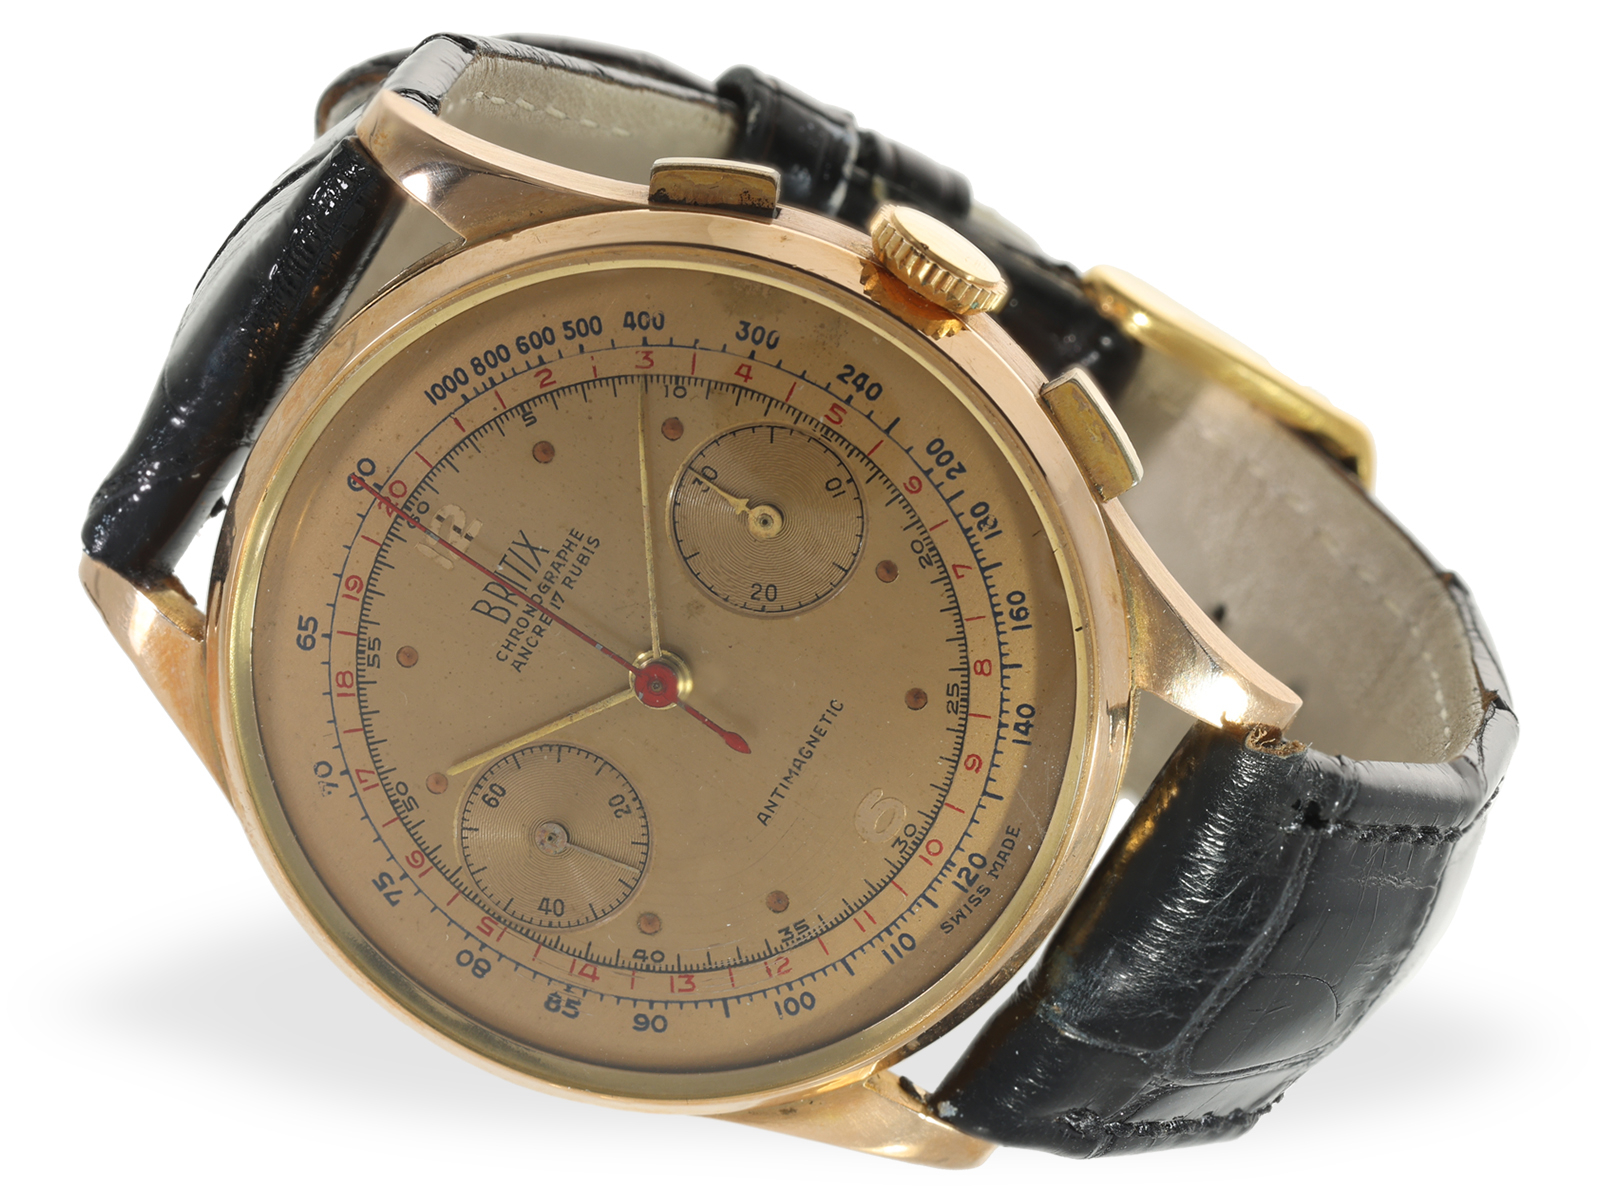 Wristwatch: excellently preserved 18K pink gold 38mm chronograph, circa 1950, Britix brand